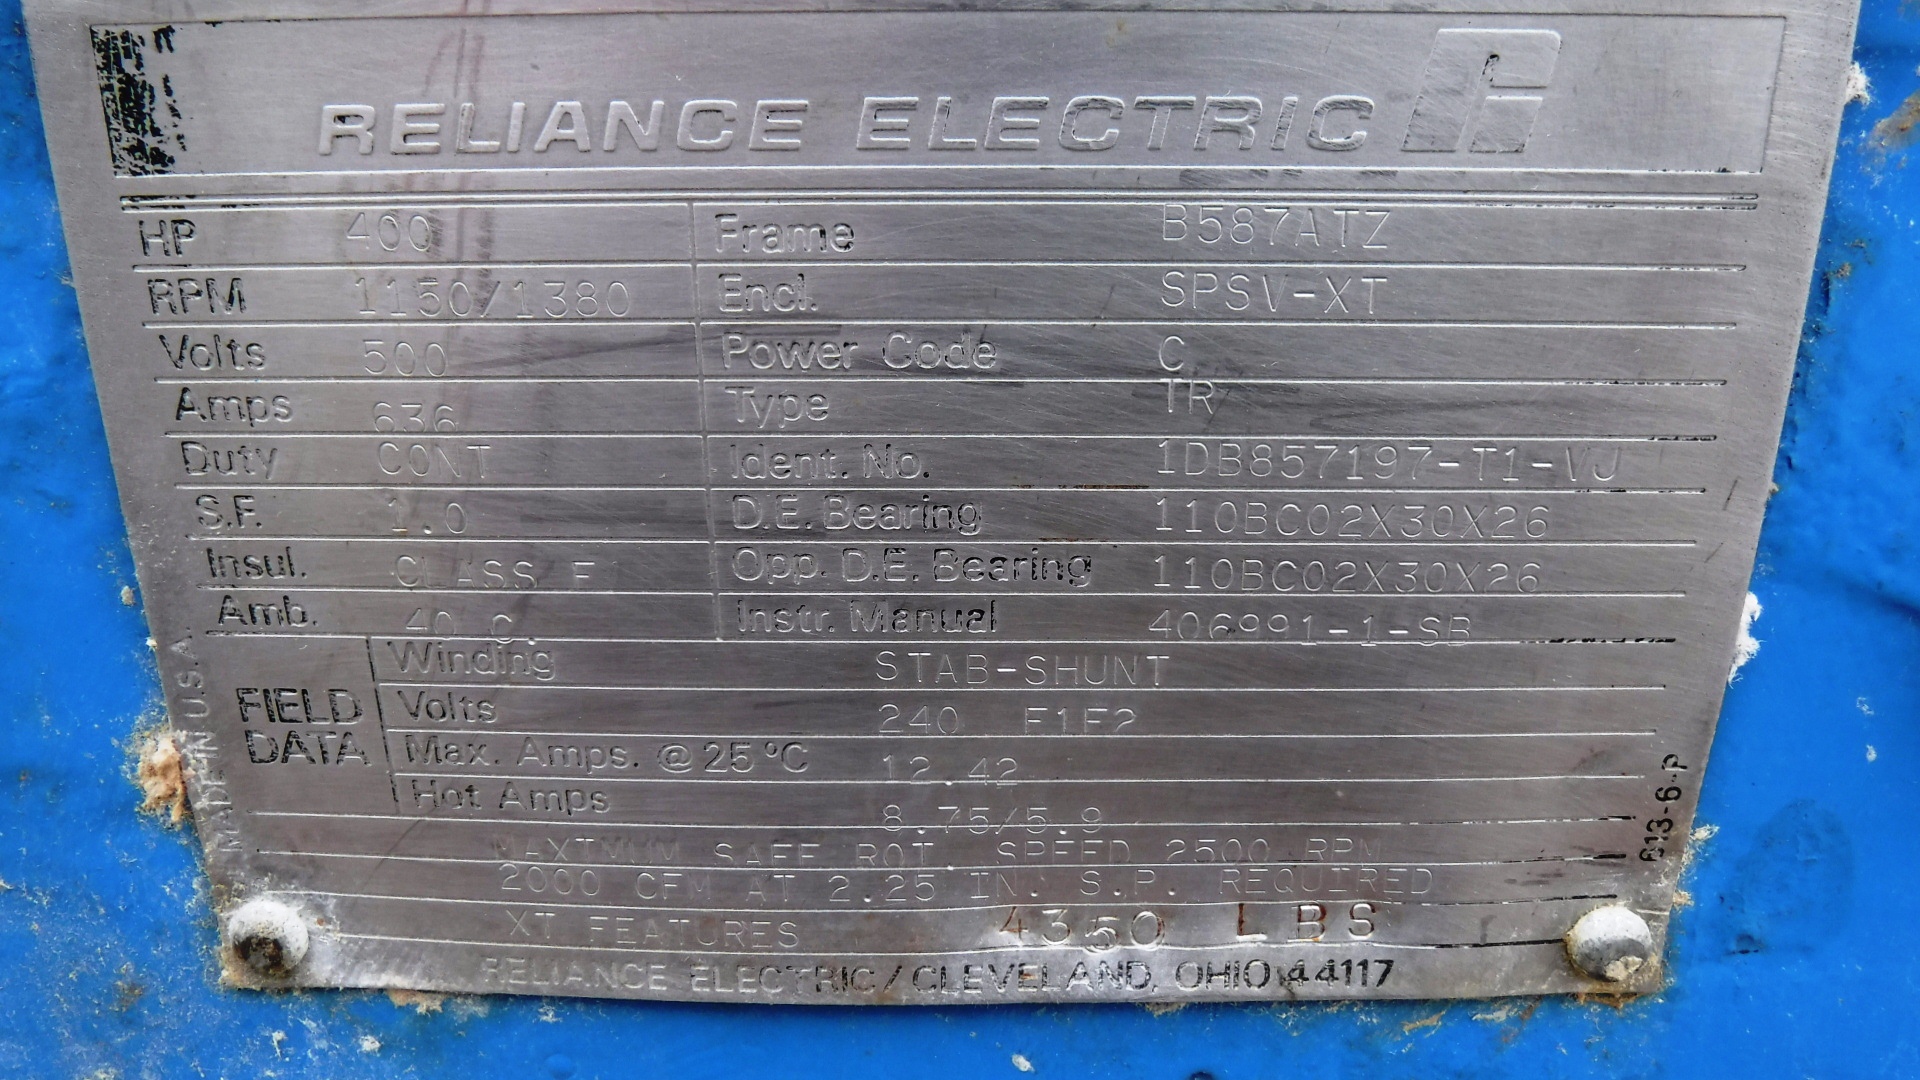 Reliance 400 HP 1150/1380 RPM B587ATZ DC Motors 78512